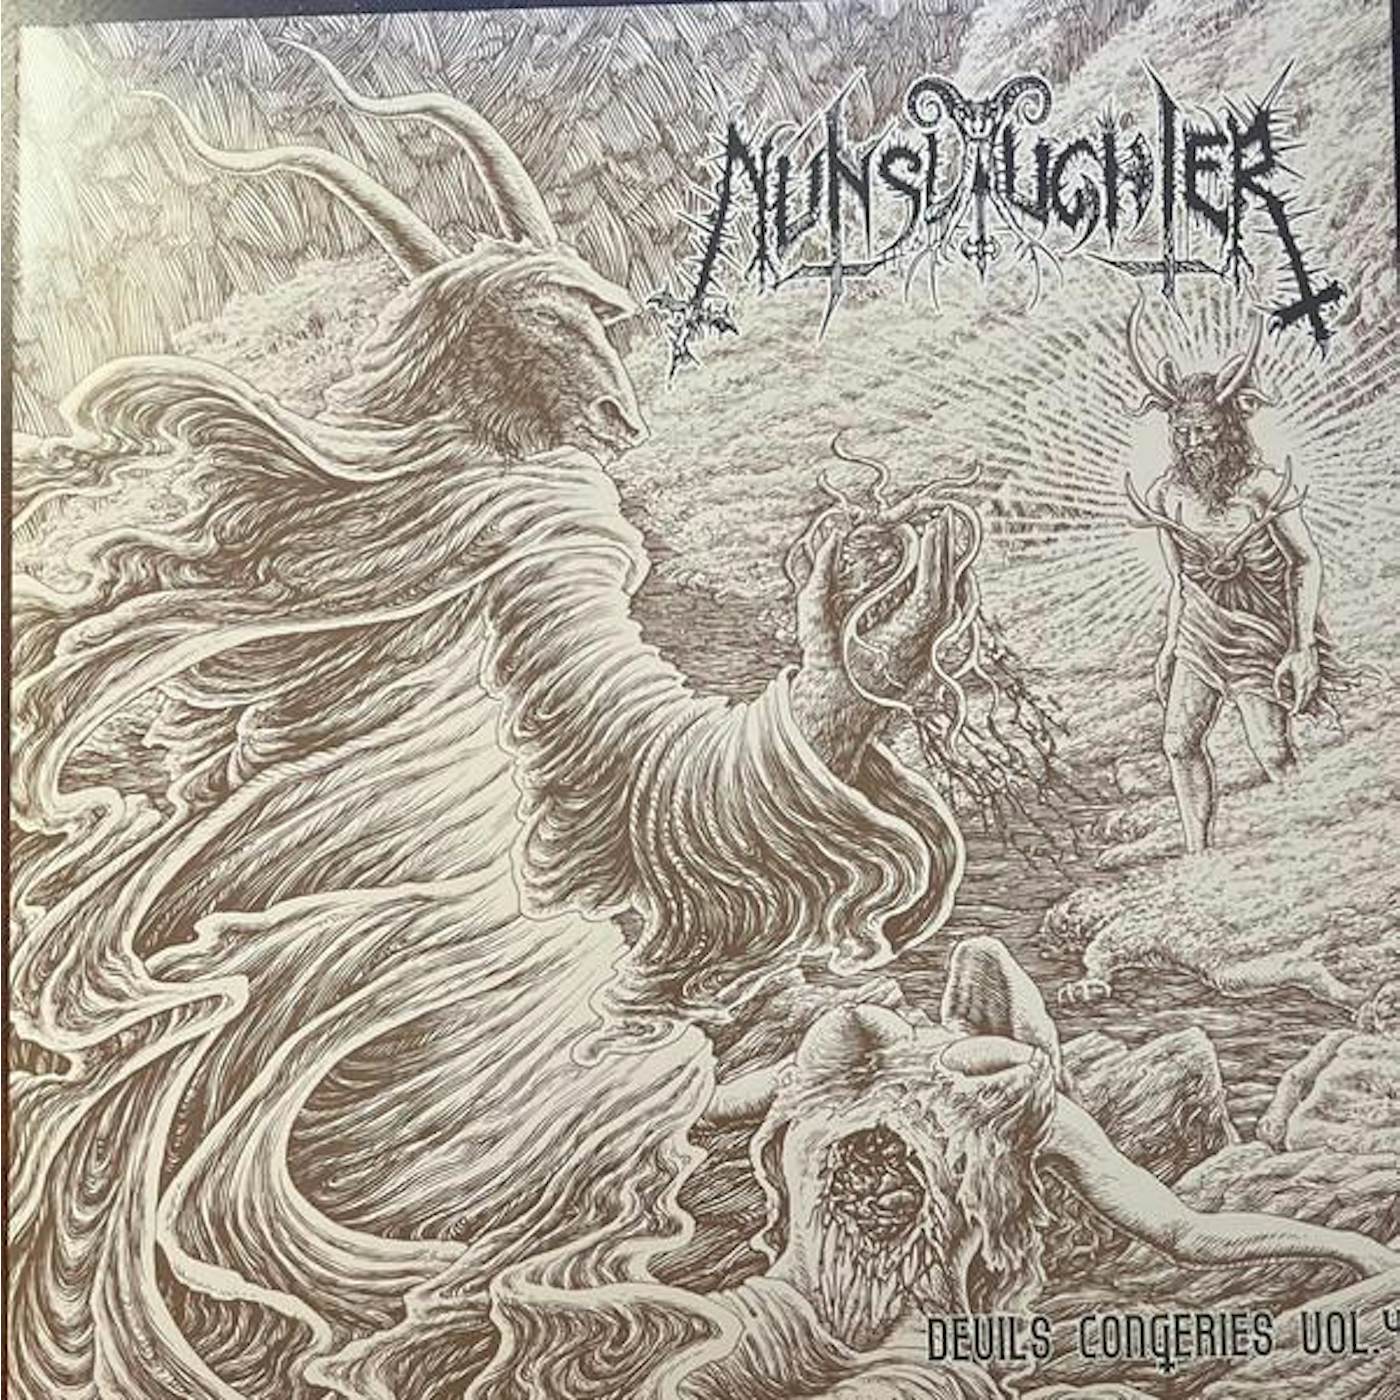 Nunslaughter DEVIL'S CONGERIES VOL 4 Vinyl Record